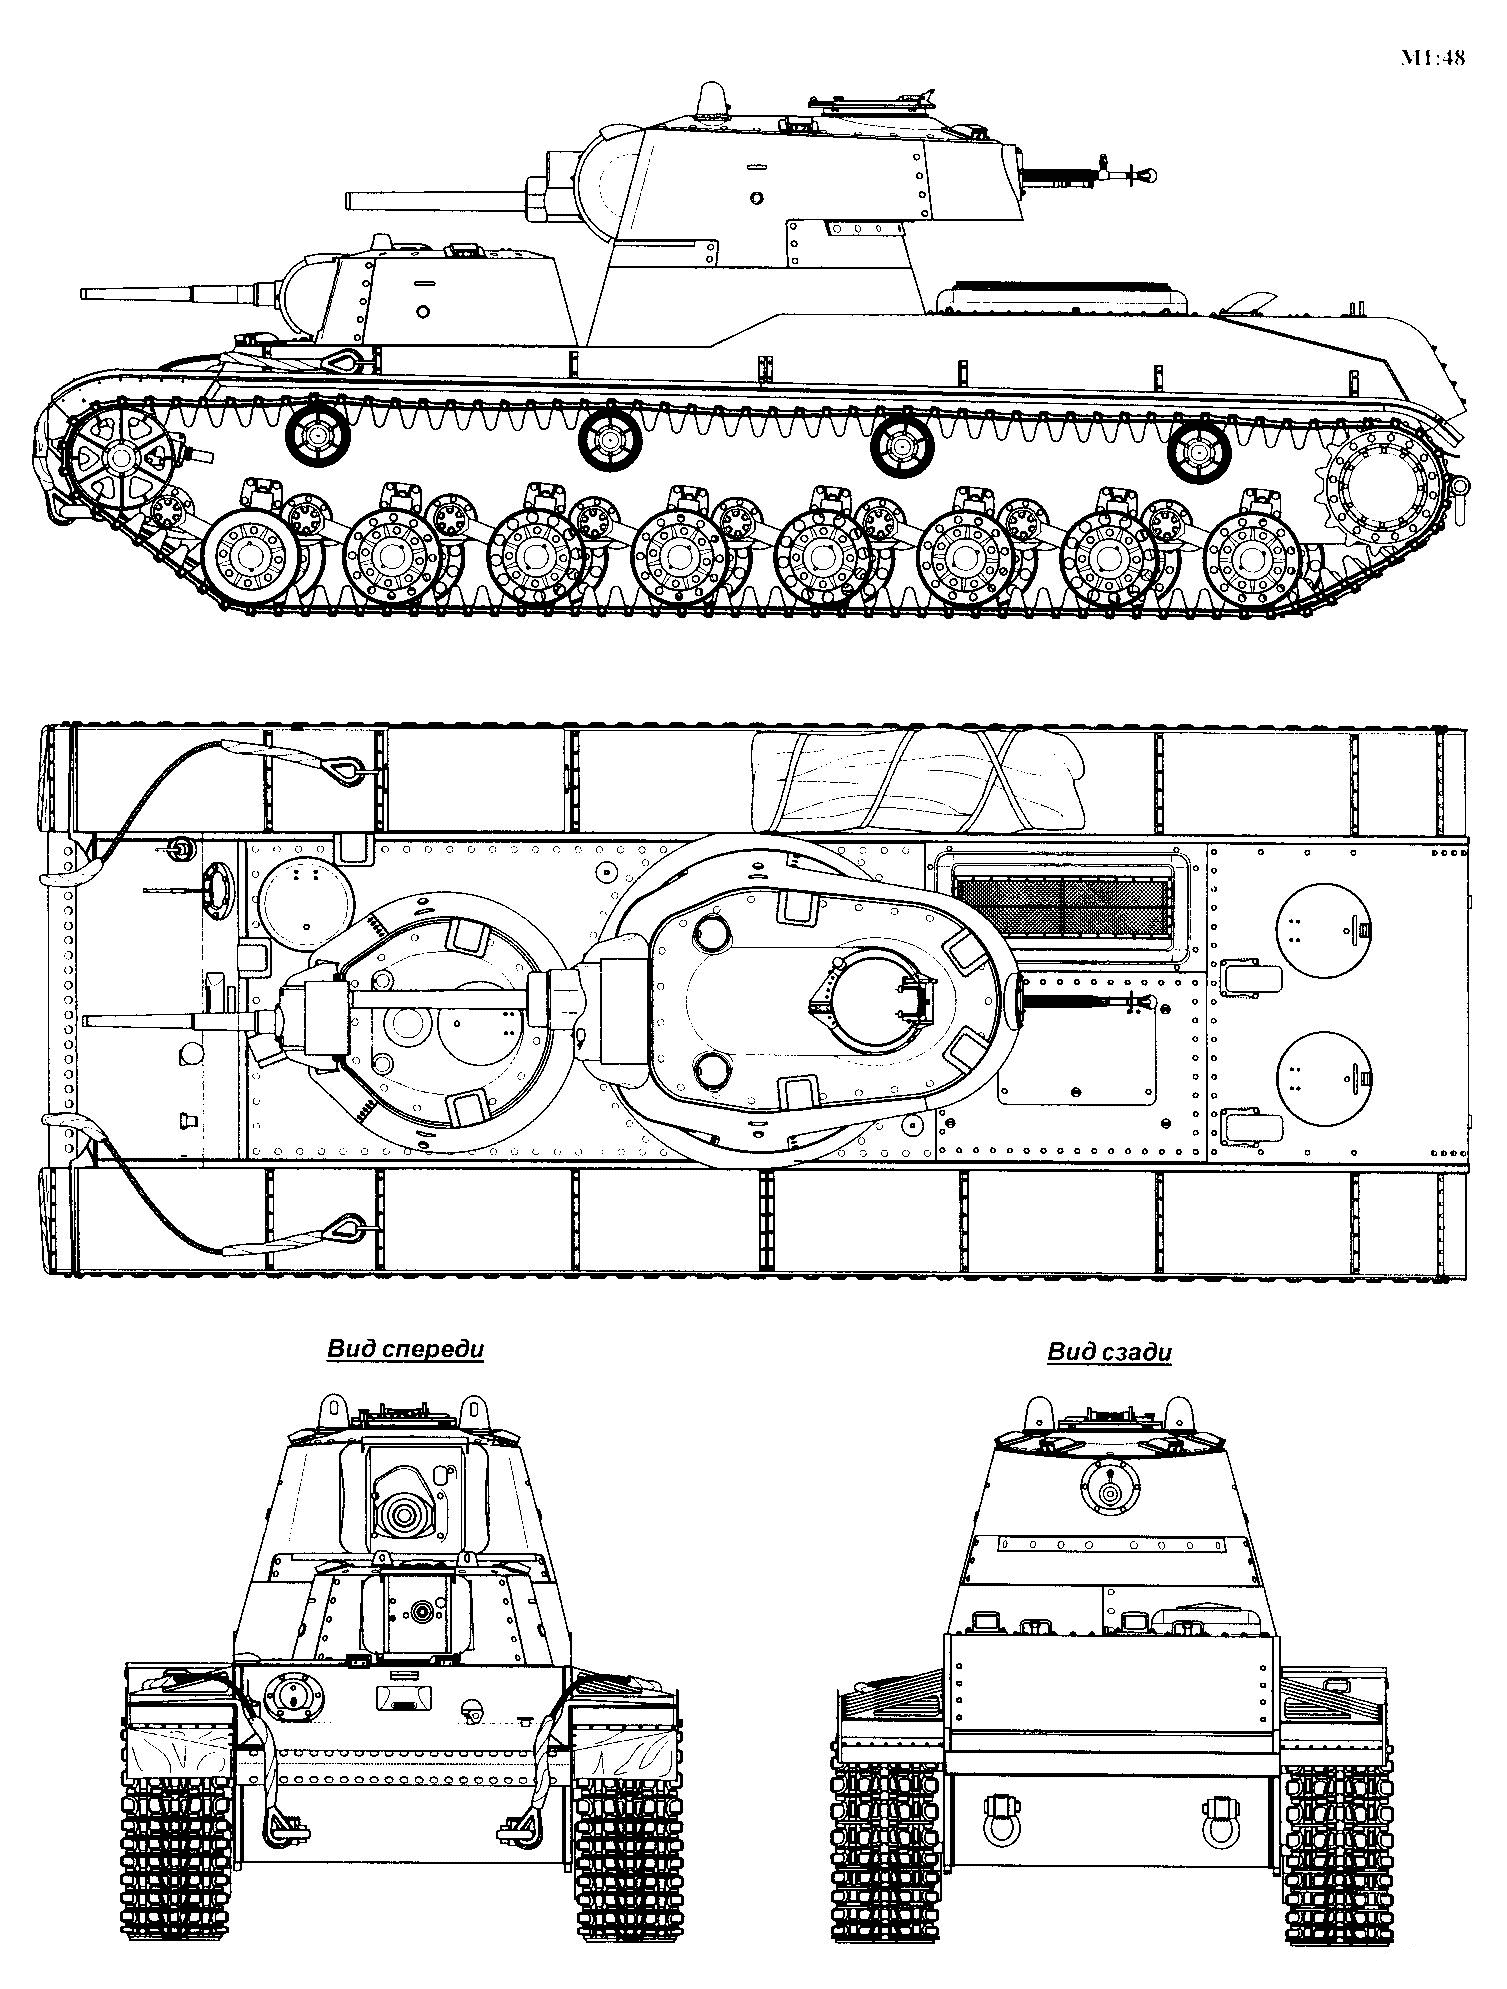 SMK tank blueprint